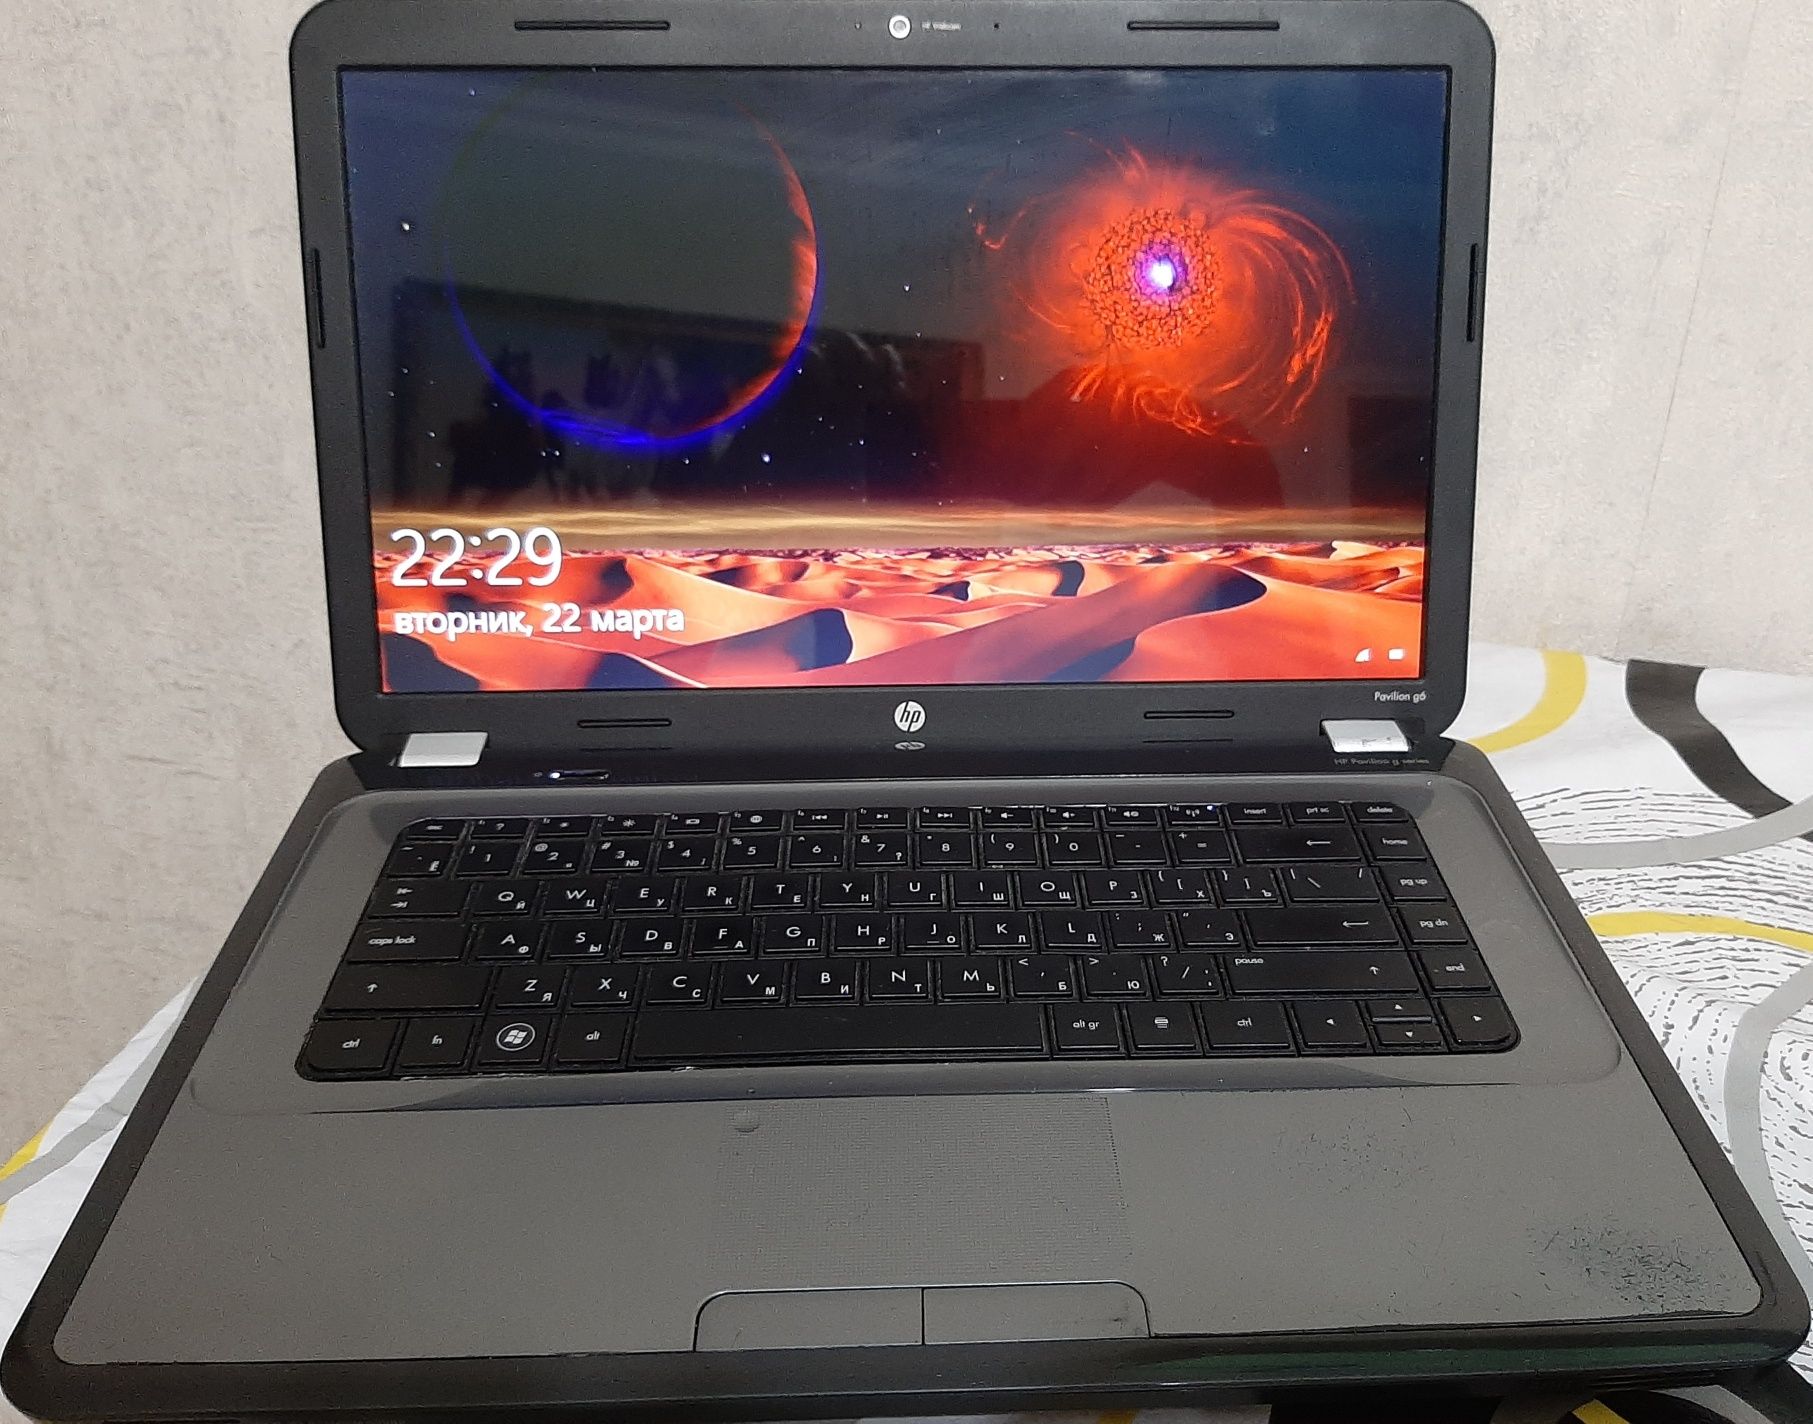 Продаётся ноутбук HP Pavilion g series ( HP Pavilion g6 Notebook PC )